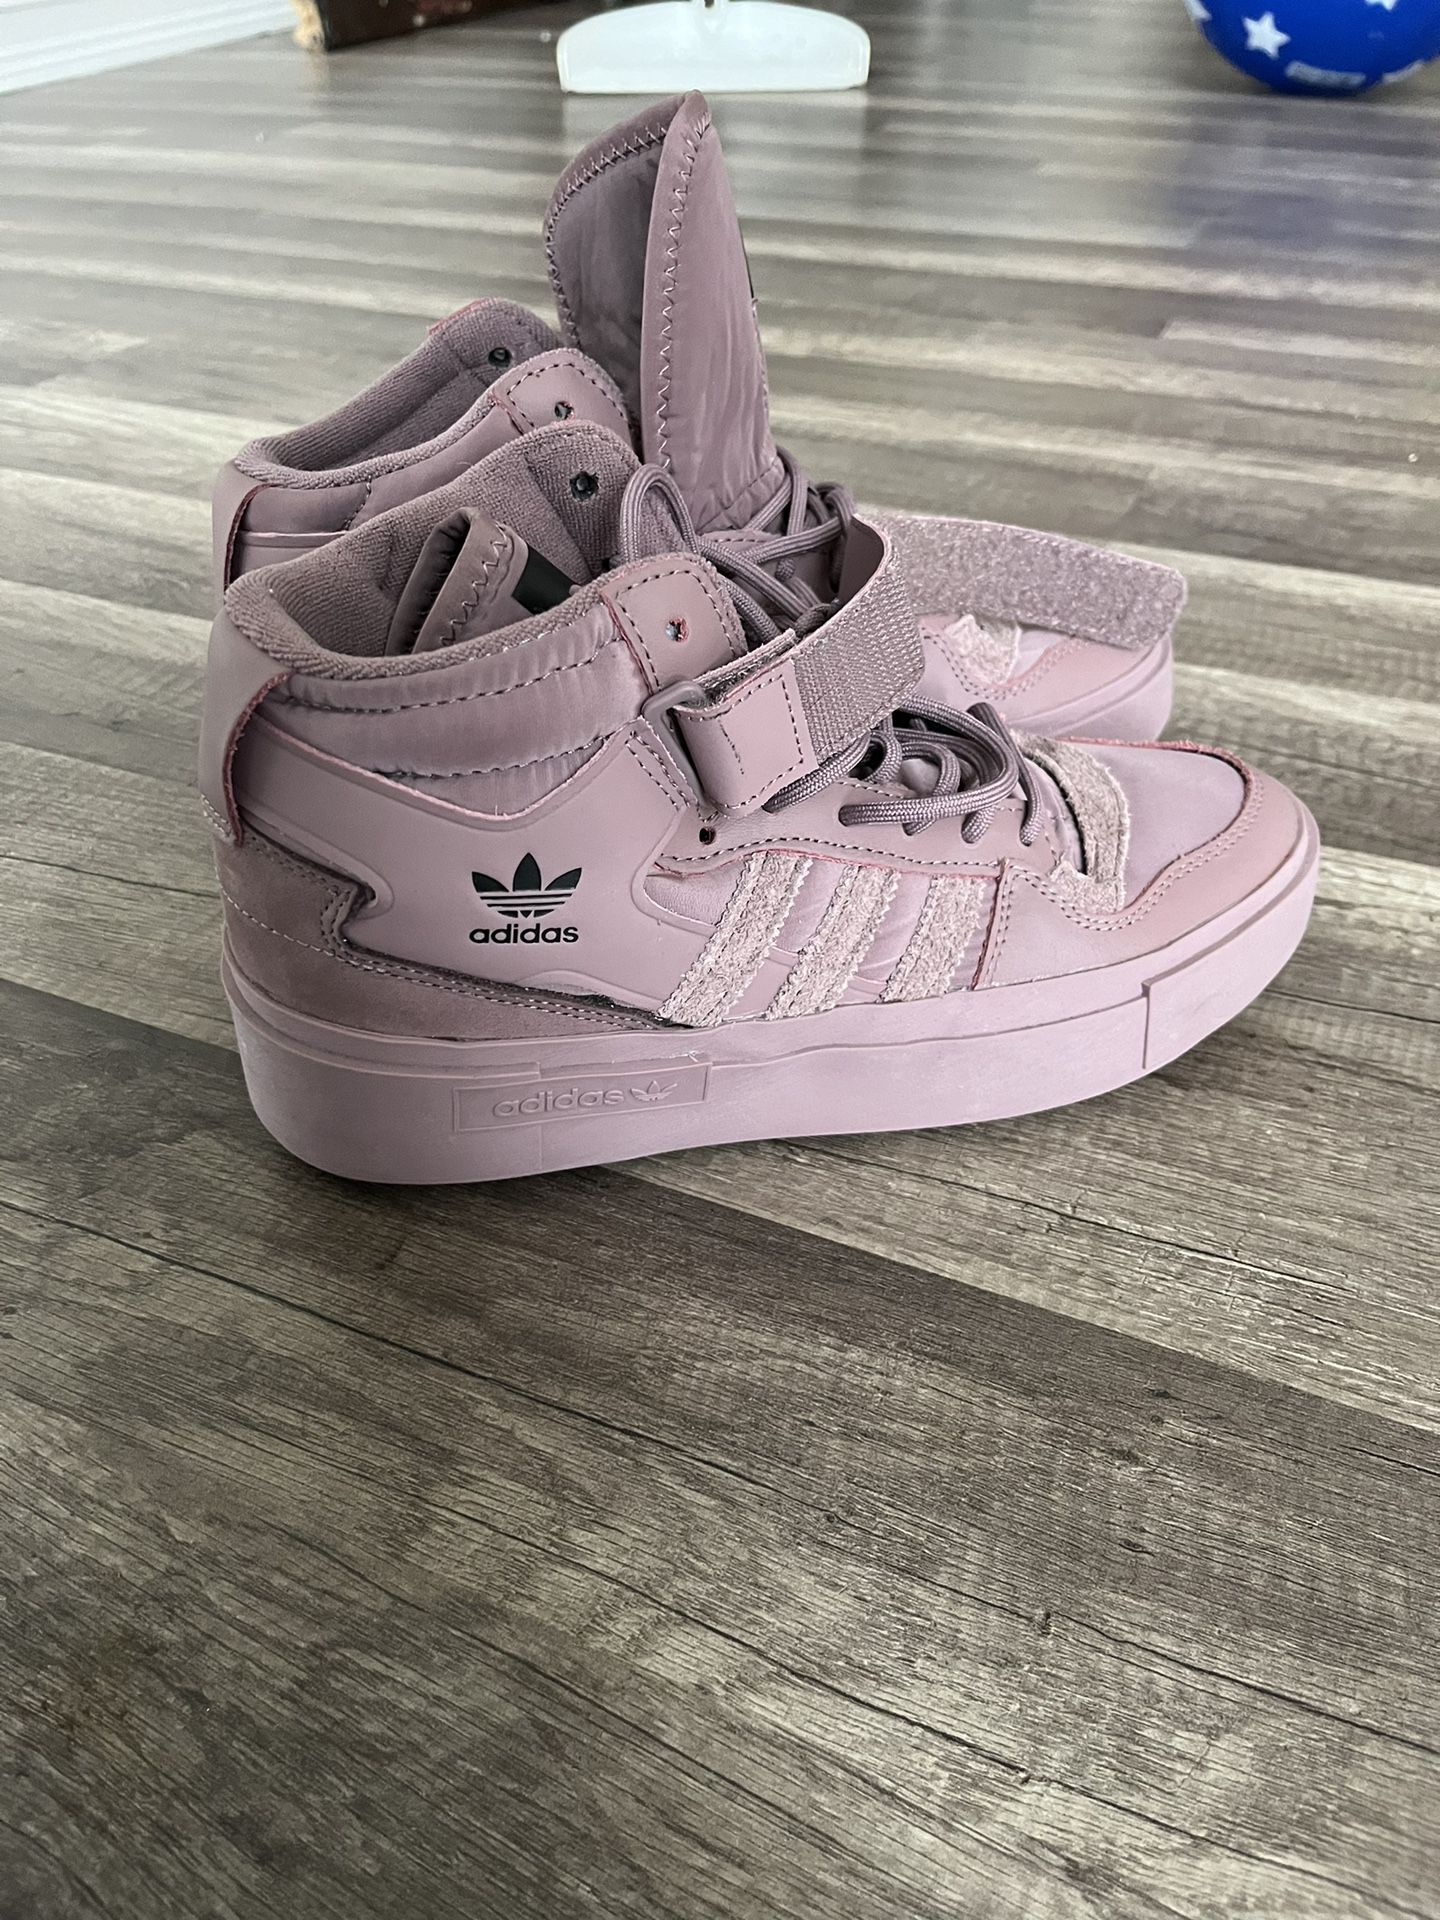 Adidas Purple Shoes Size 8 